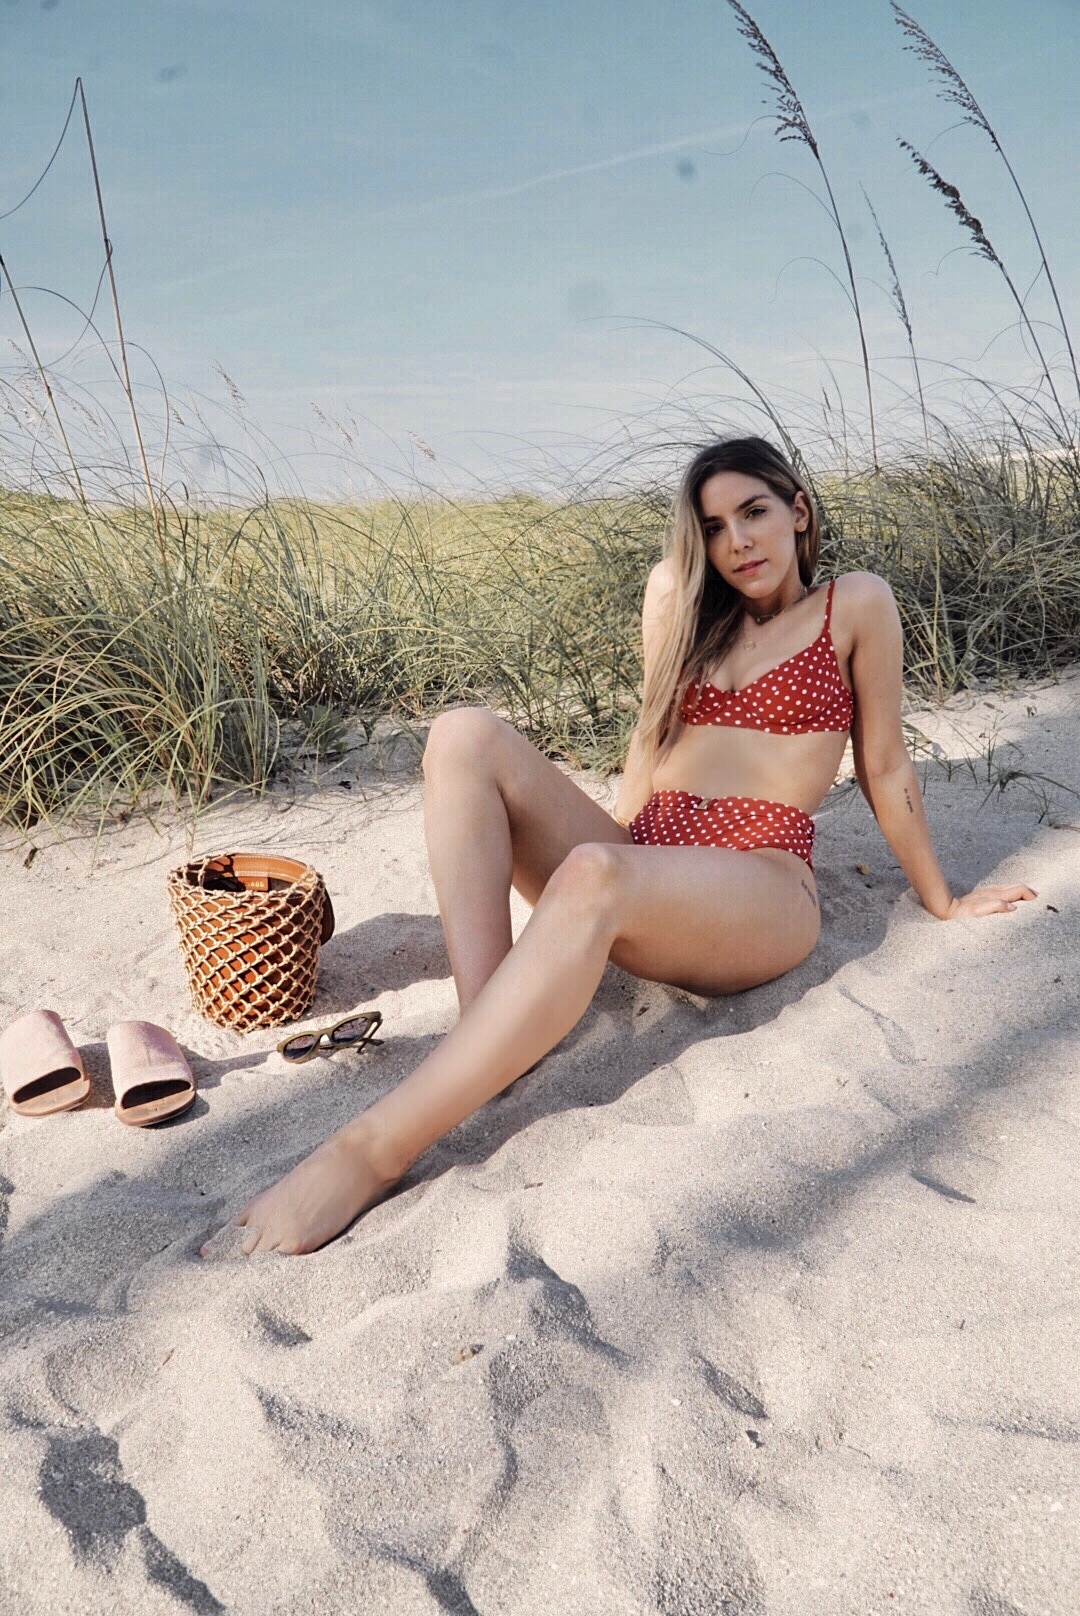 Erin sitting on the sand in a red bikini